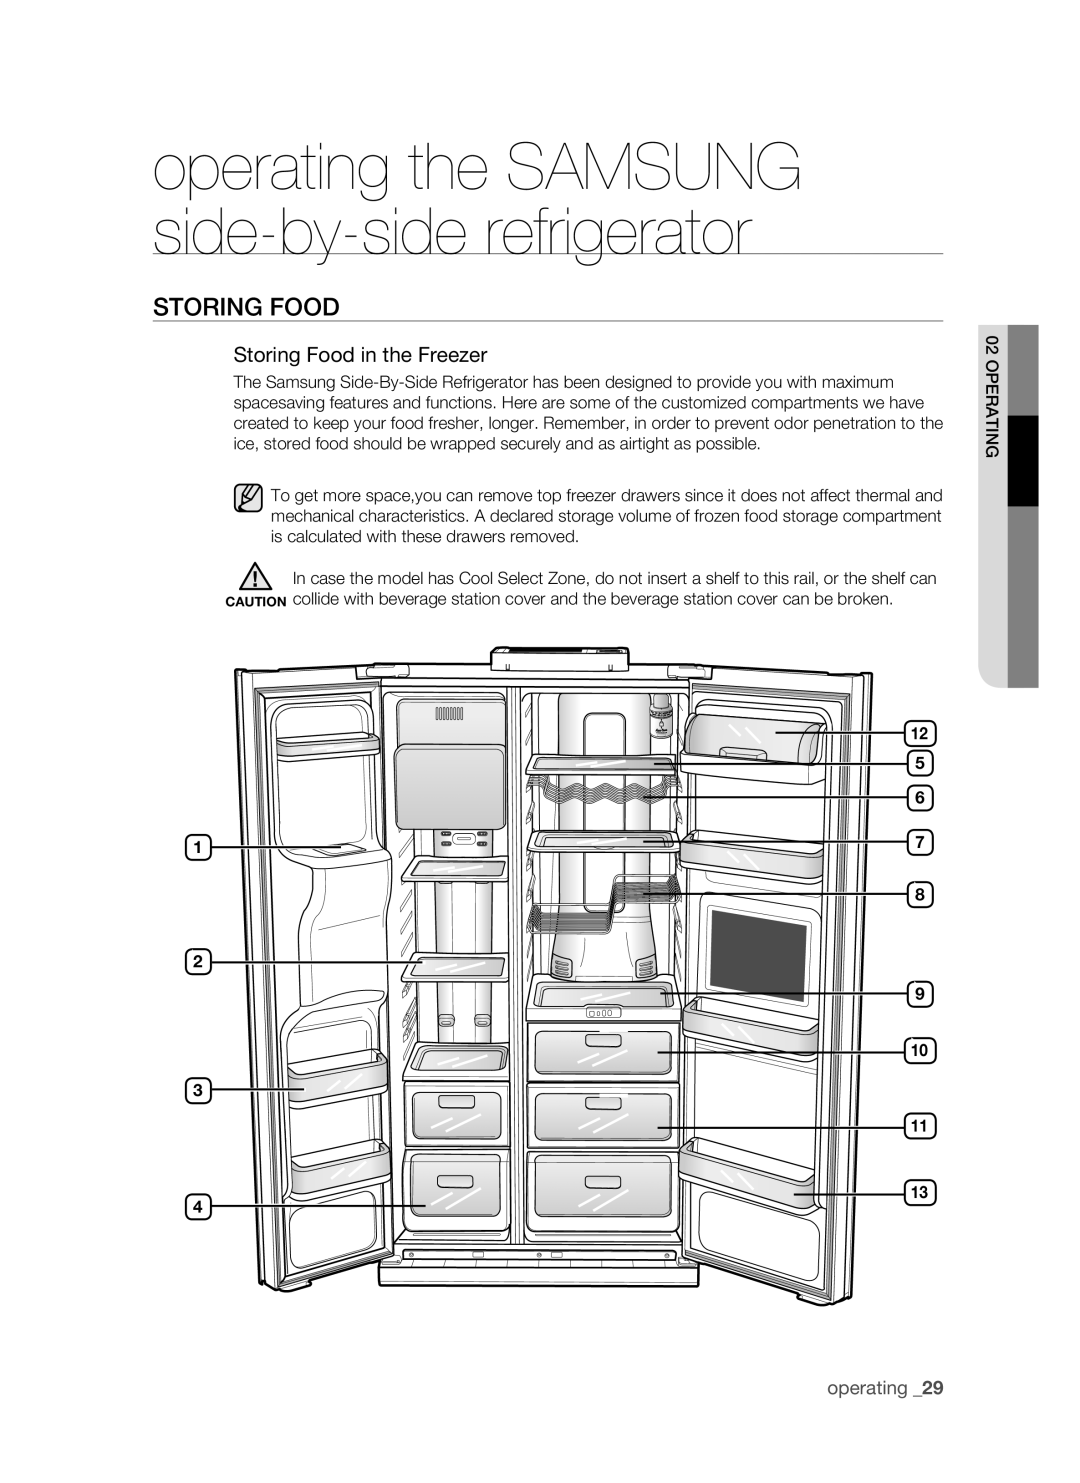 Samsung RSH1K, SRS610HDSS, RSH1J Storing food, operating the SAMSUNG side-by-side refrigerator, Storing Food in the Freezer 